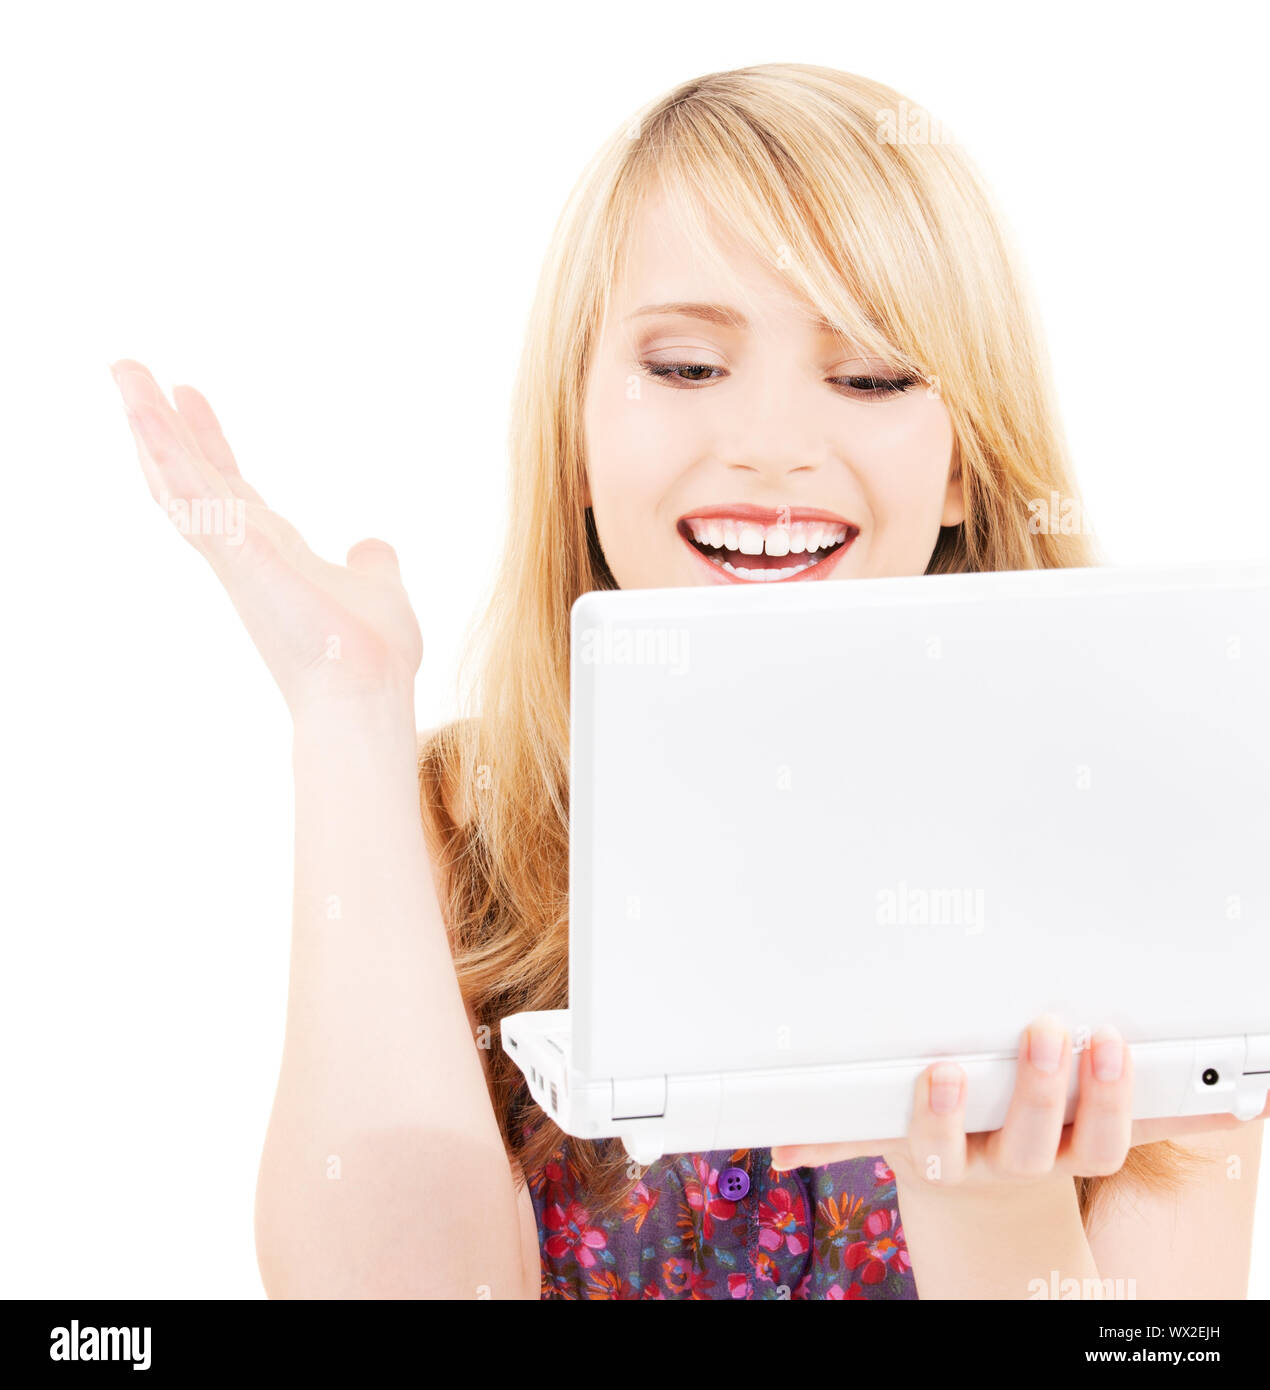 teenage girl with laptop computer Stock Photo